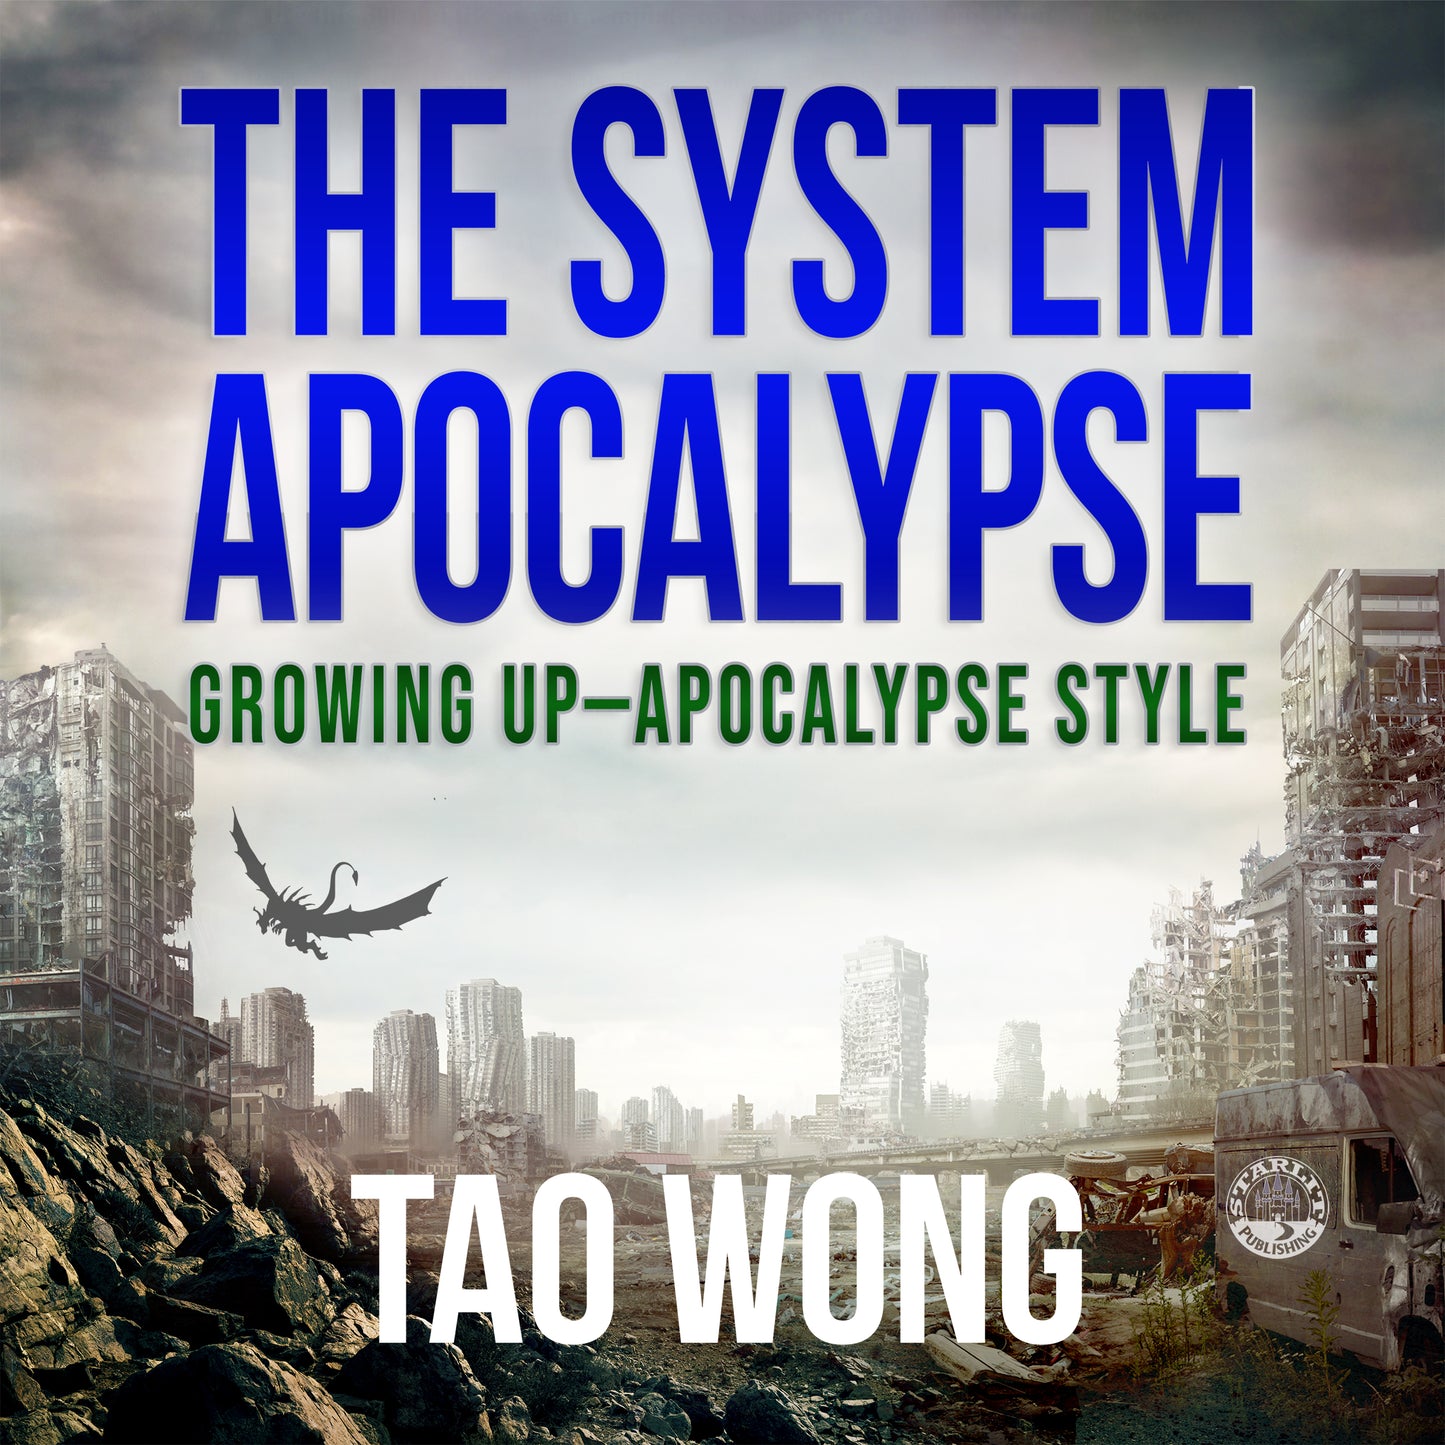 Growing Up — Apocalypse Style (A System Apocalypse Short Story)